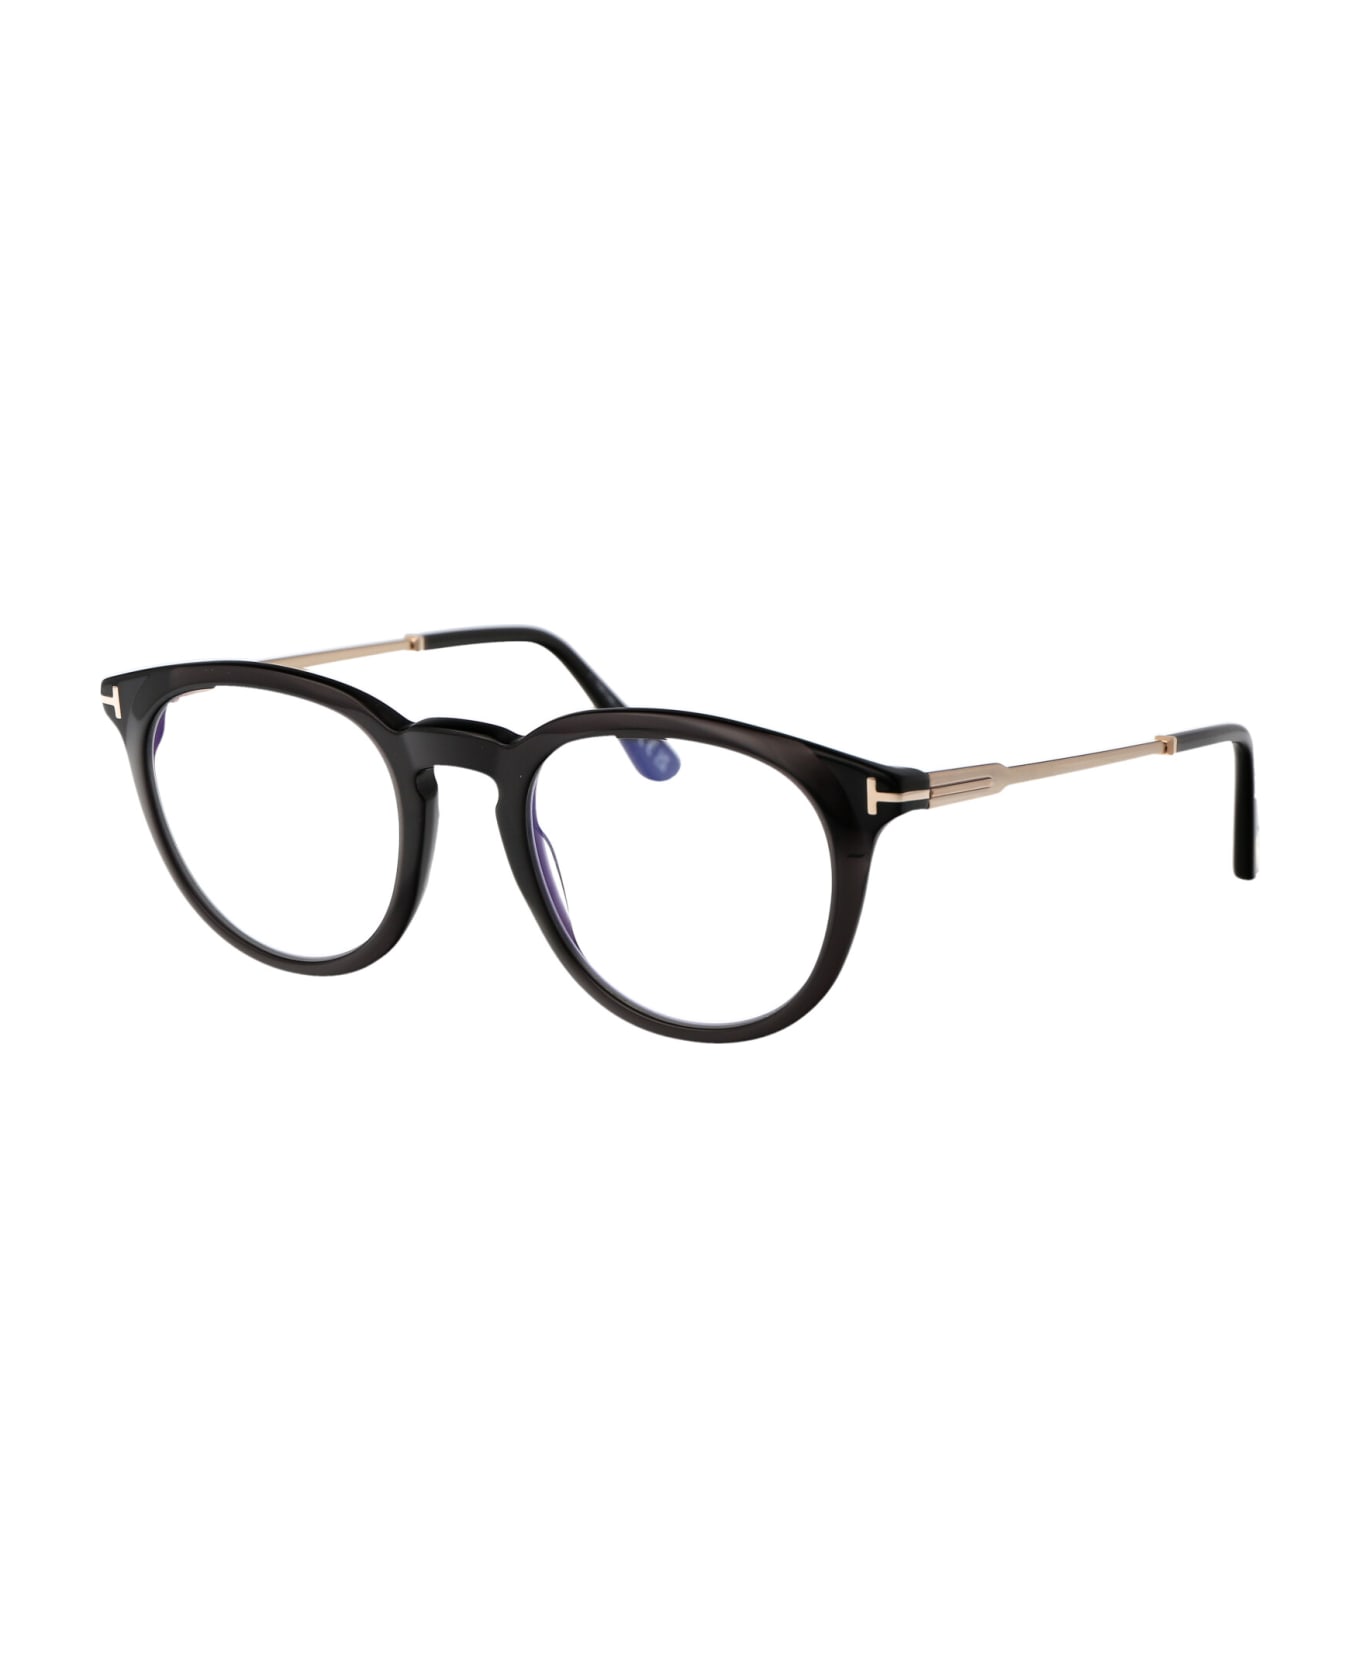 Tom Ford Eyewear Ft5905-b Glasses - 005 Nero/Altro